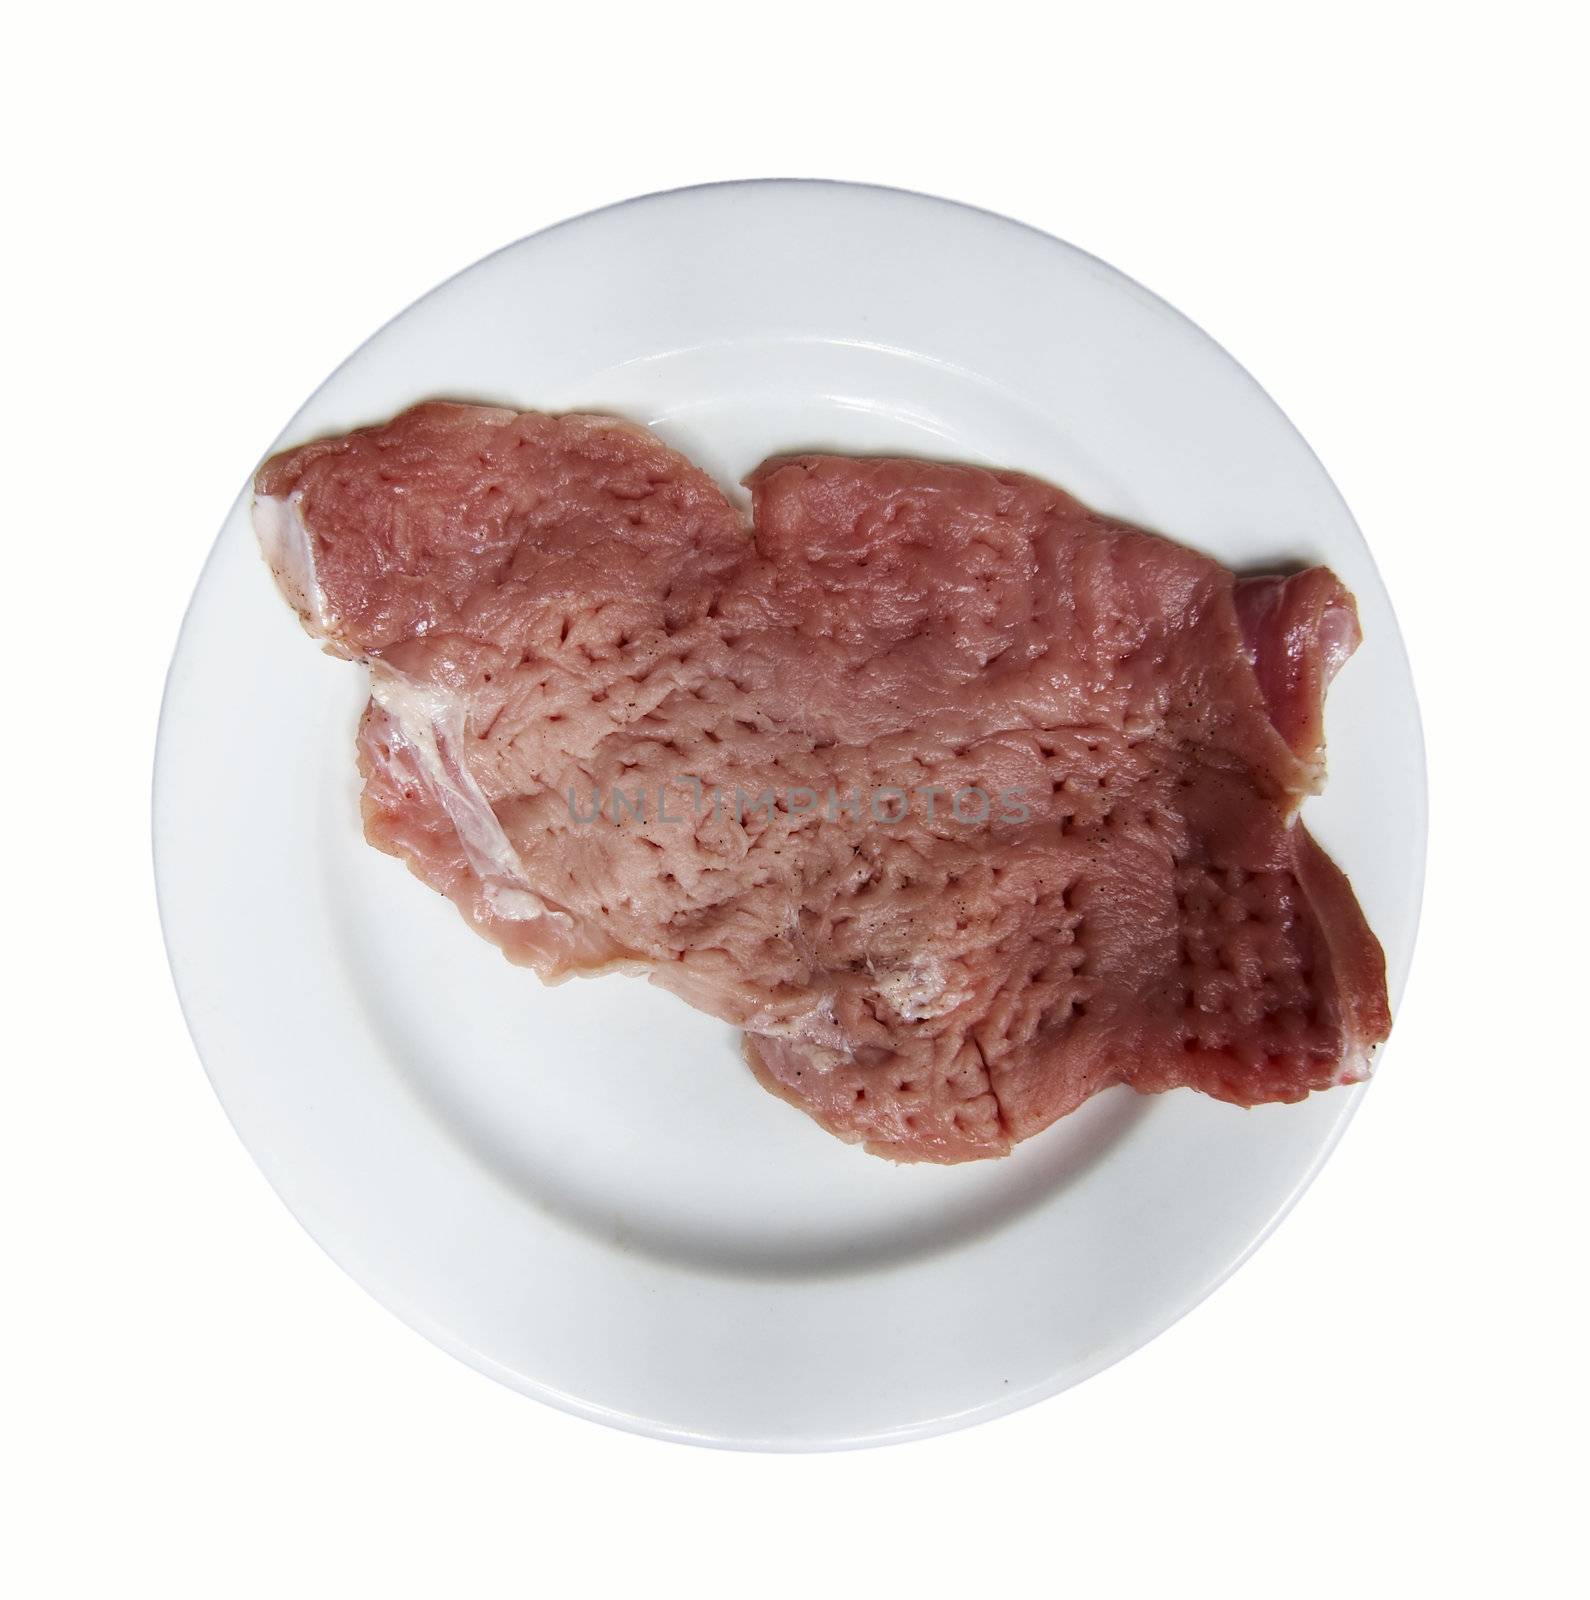 Detail of the rump-steak - raw pork meat